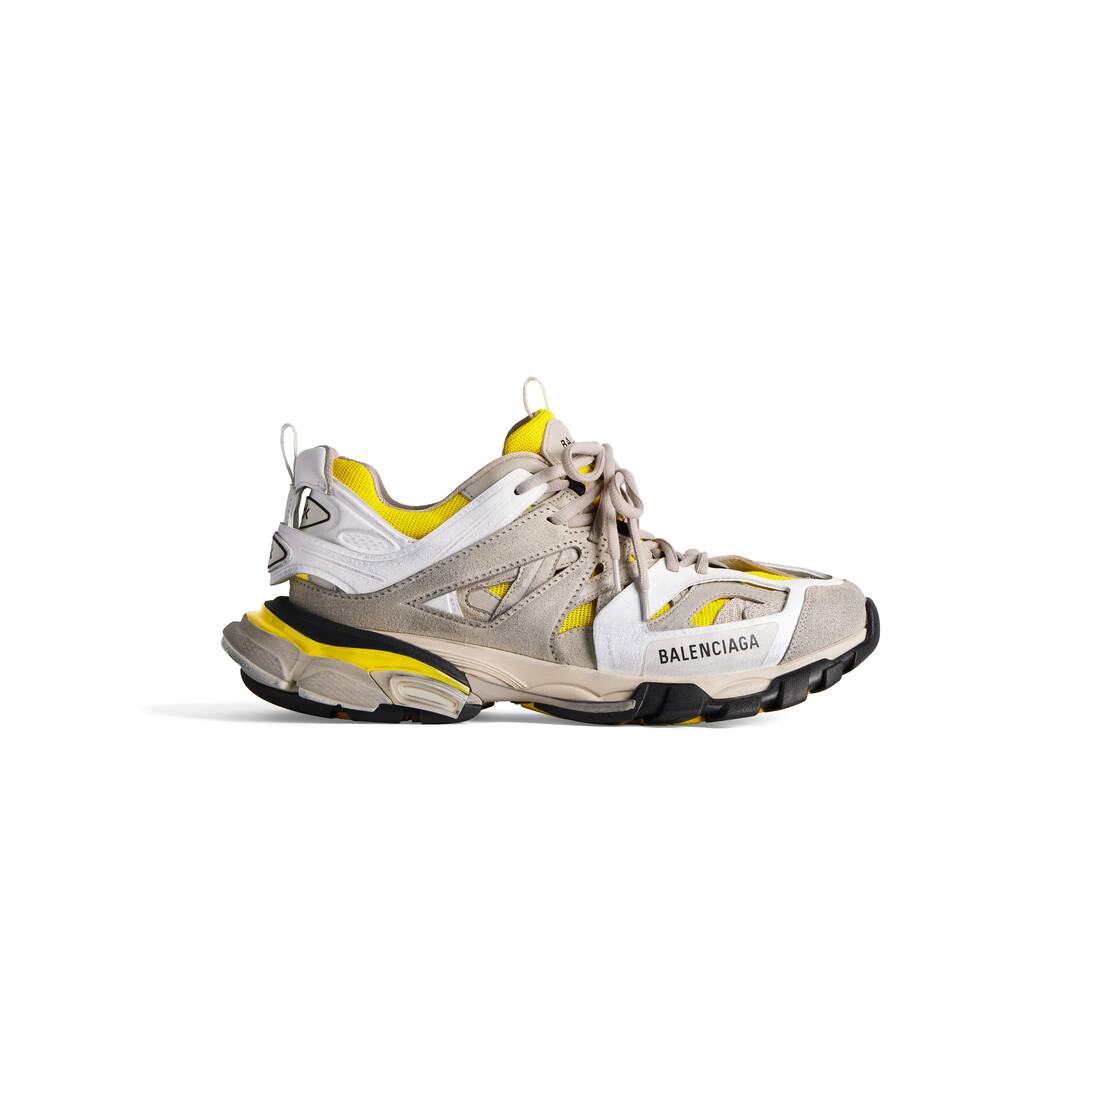 Men's Track Sneaker in Yellow/white/beige/grey/black